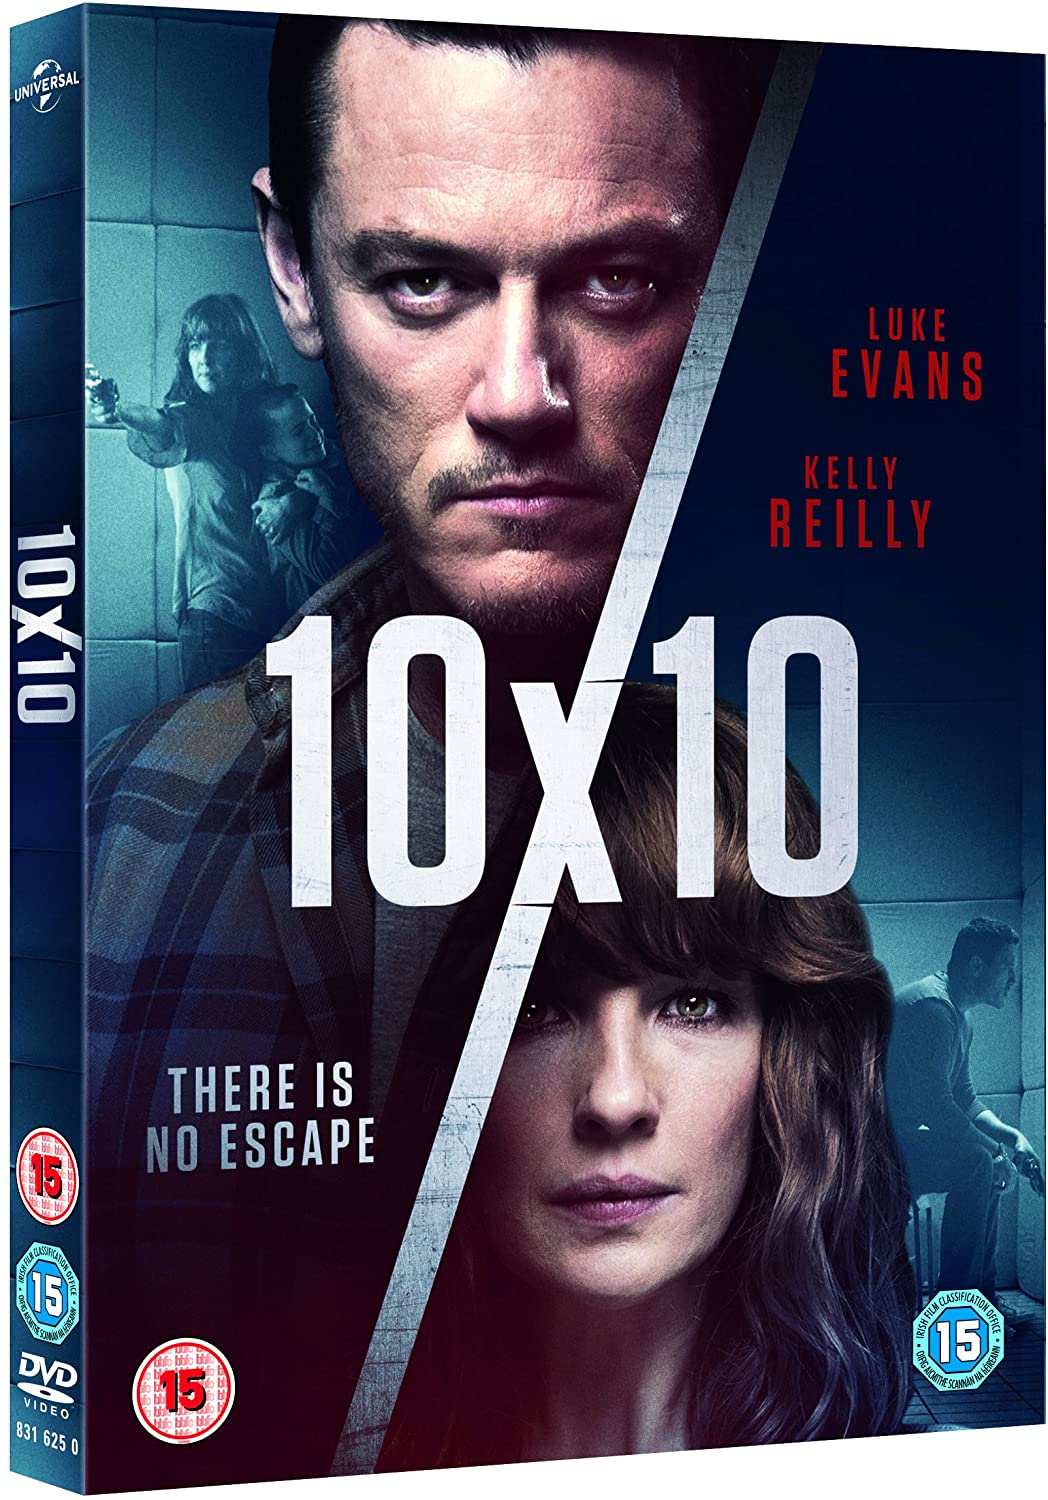 10x10 [2018] (DVD)